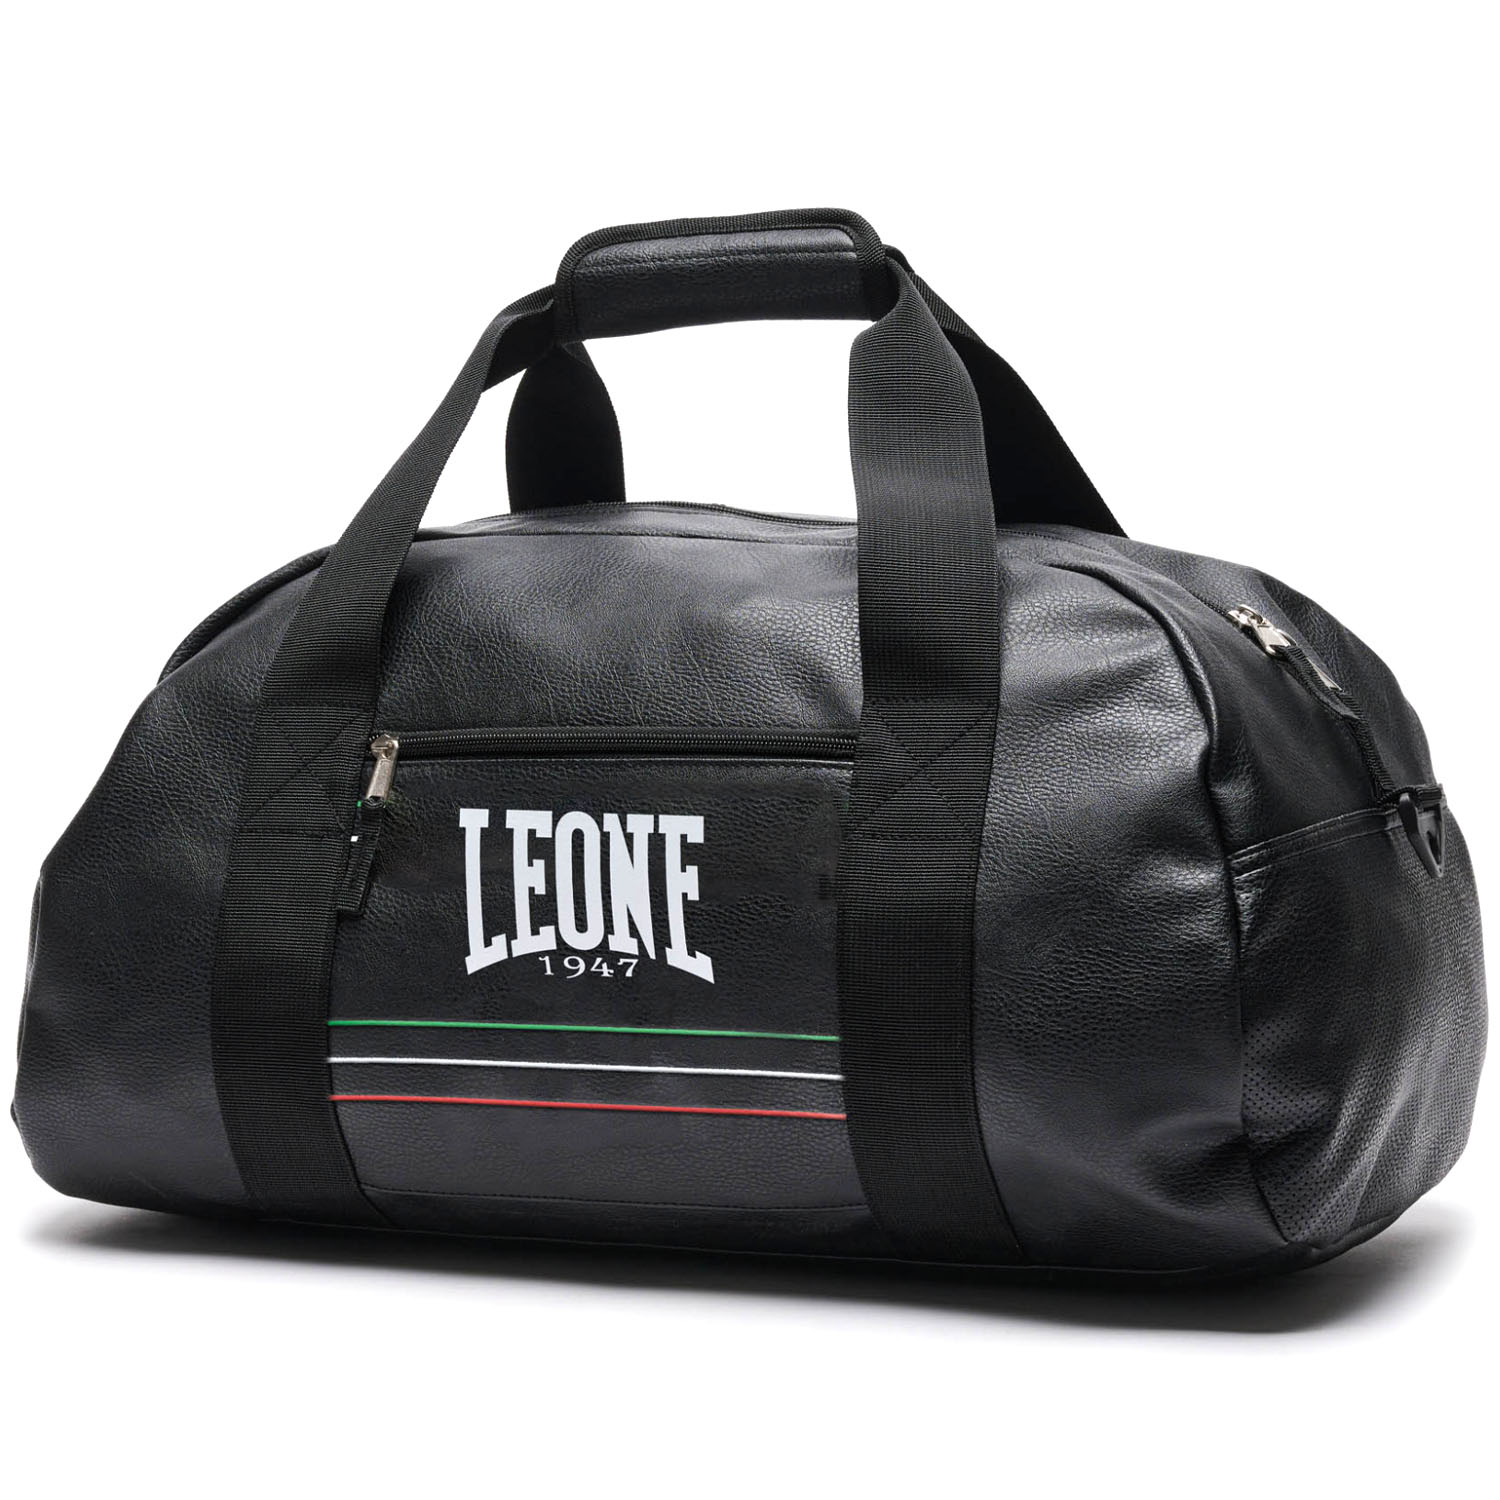 LEONE Sporttasche, Duffel Bag Flag, AC958, schwarz